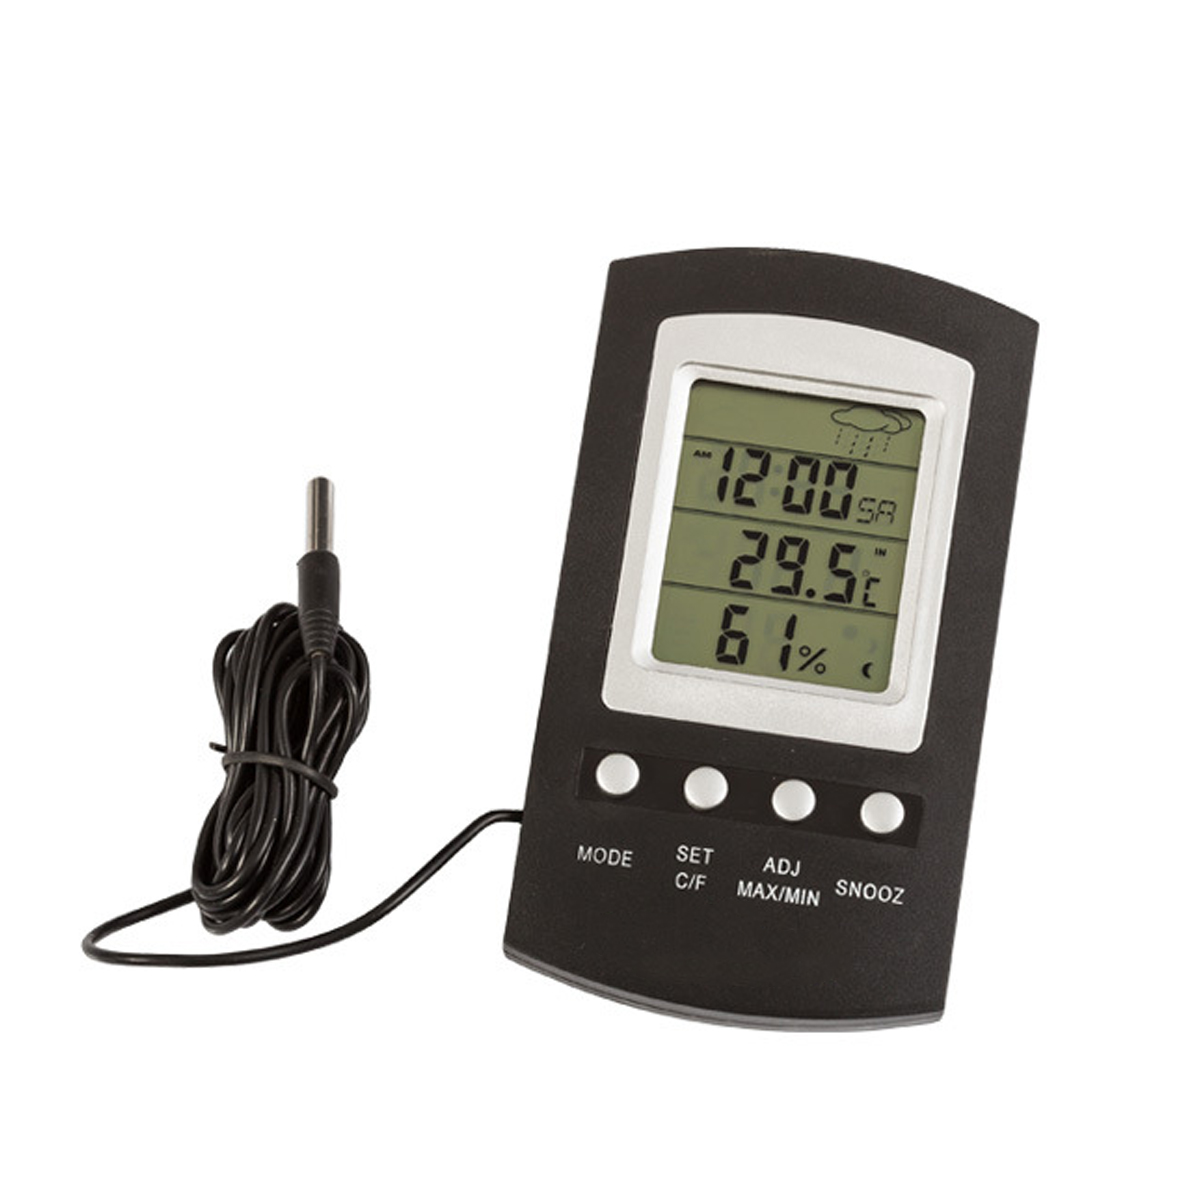 

LCD Digital Max/Min Thermometer Hygrometer Alarm Temperature Humidity Tester Reptile